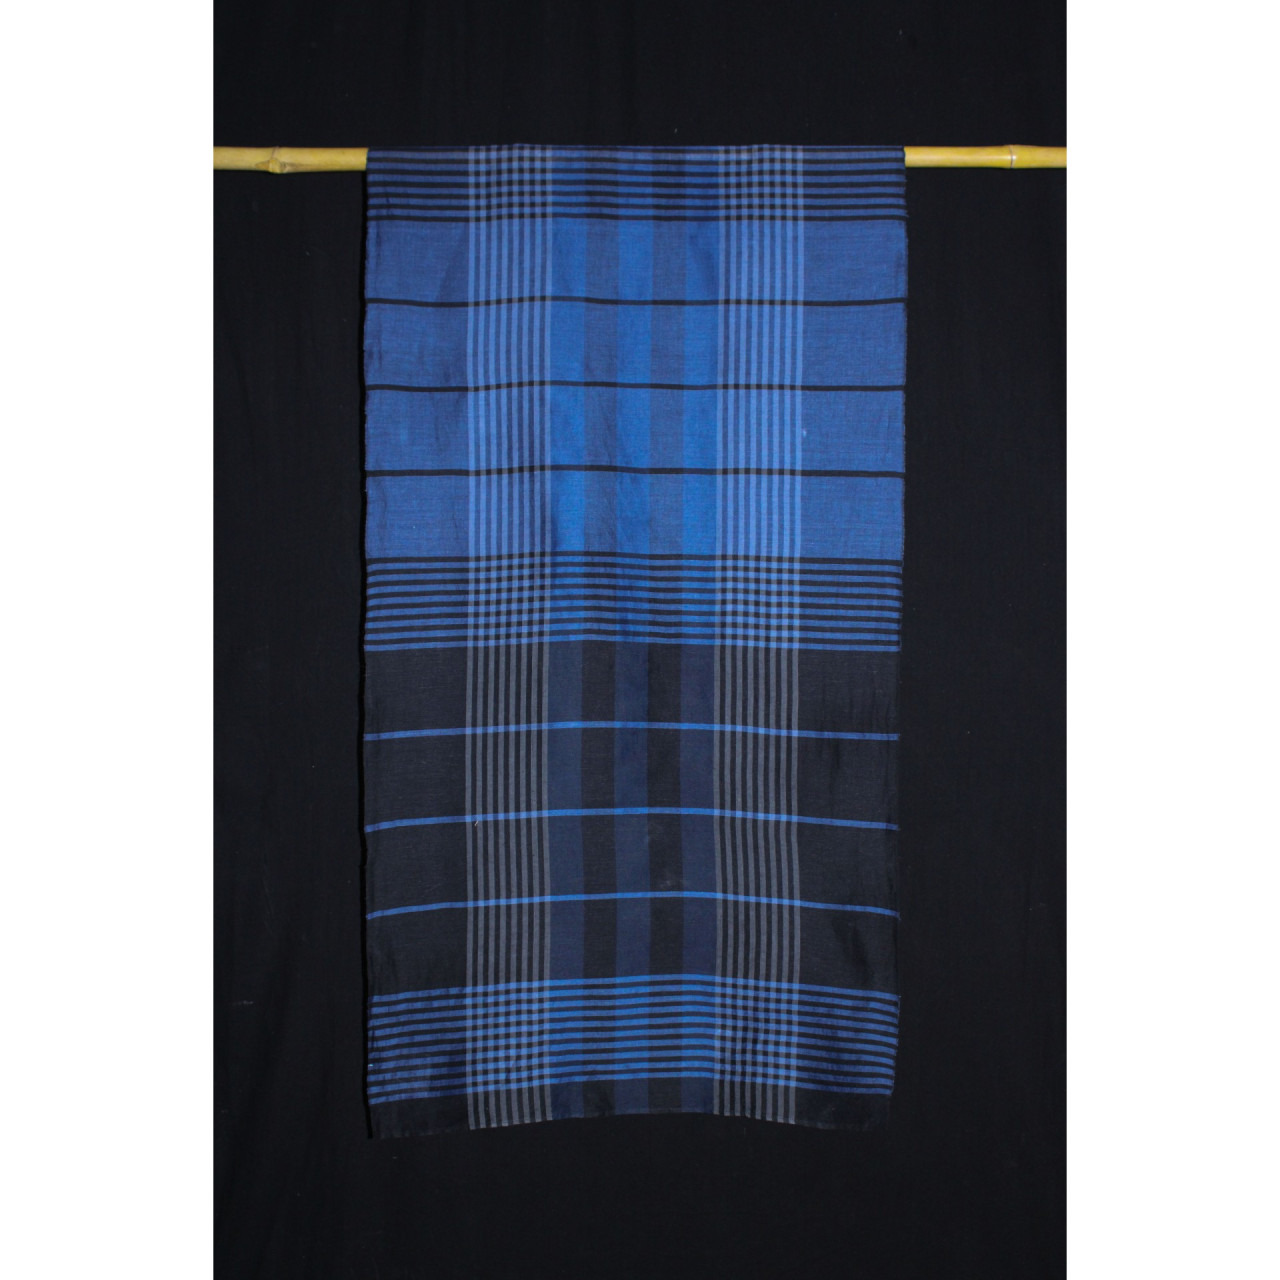 (2159) Khadi  and linen Azo-free dyed stole from Shantipur - Indigo, black, blue, stripes, checks